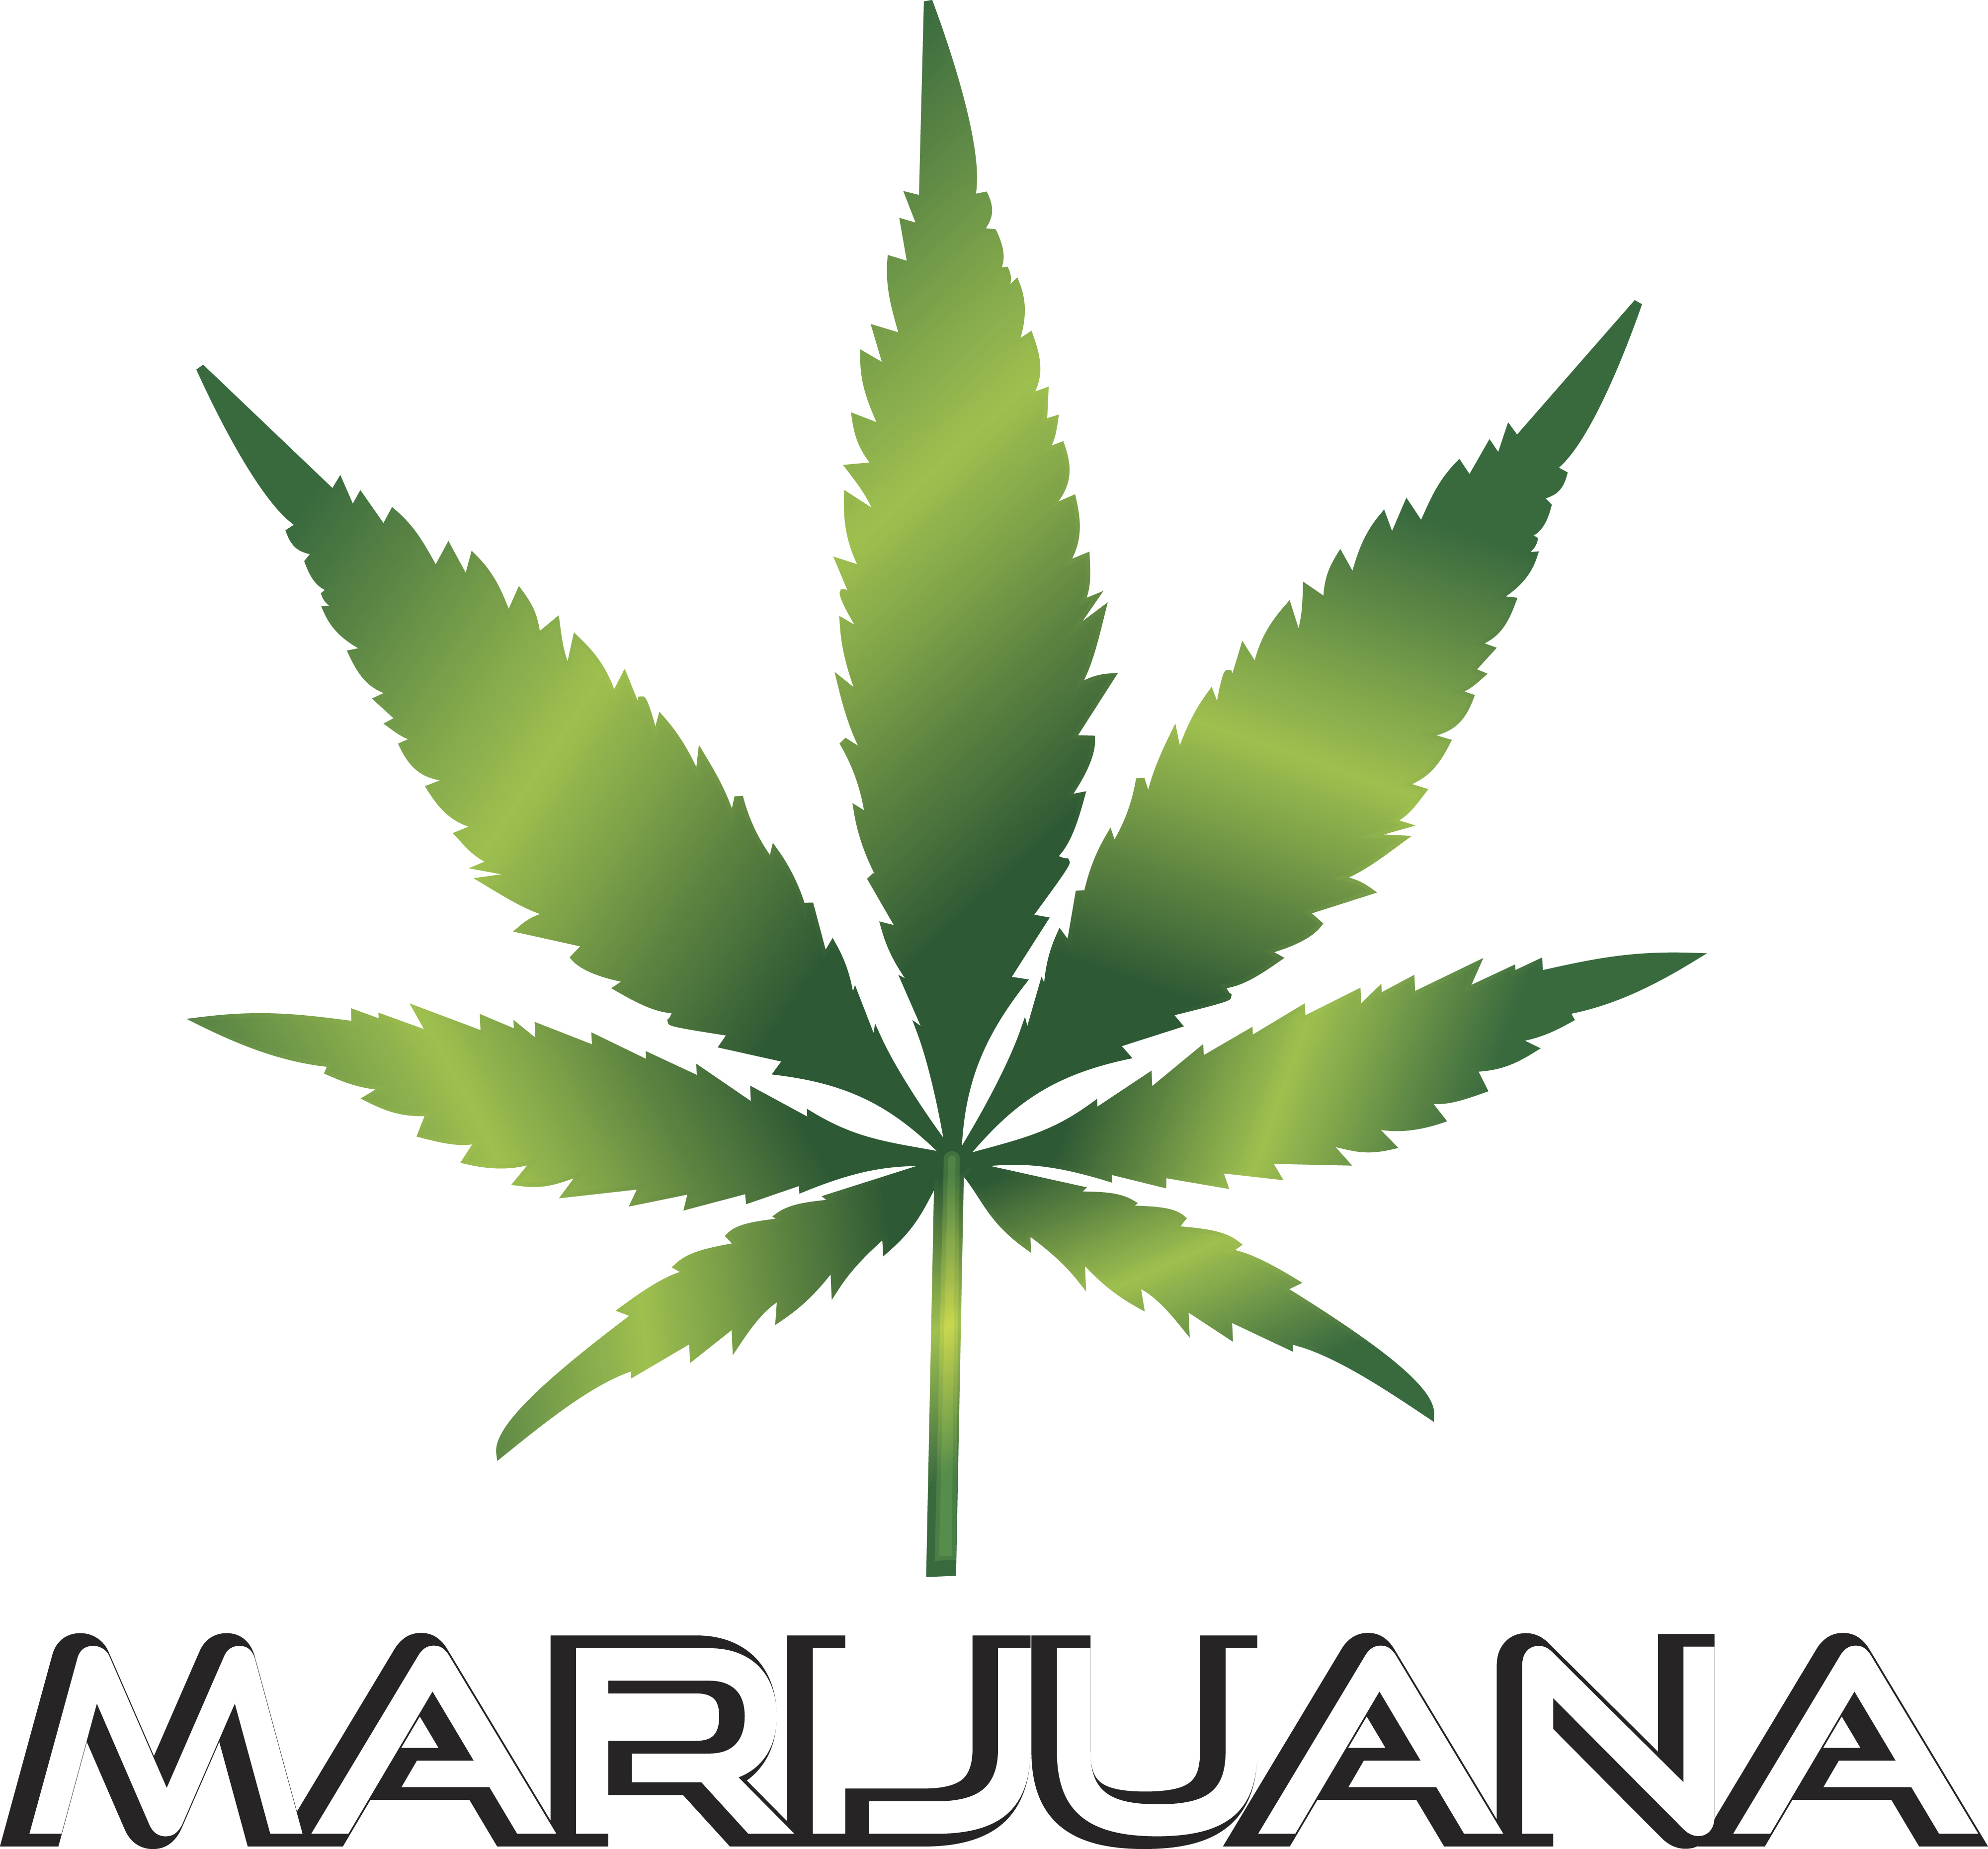 Free Clipart Of A marijuana leaf